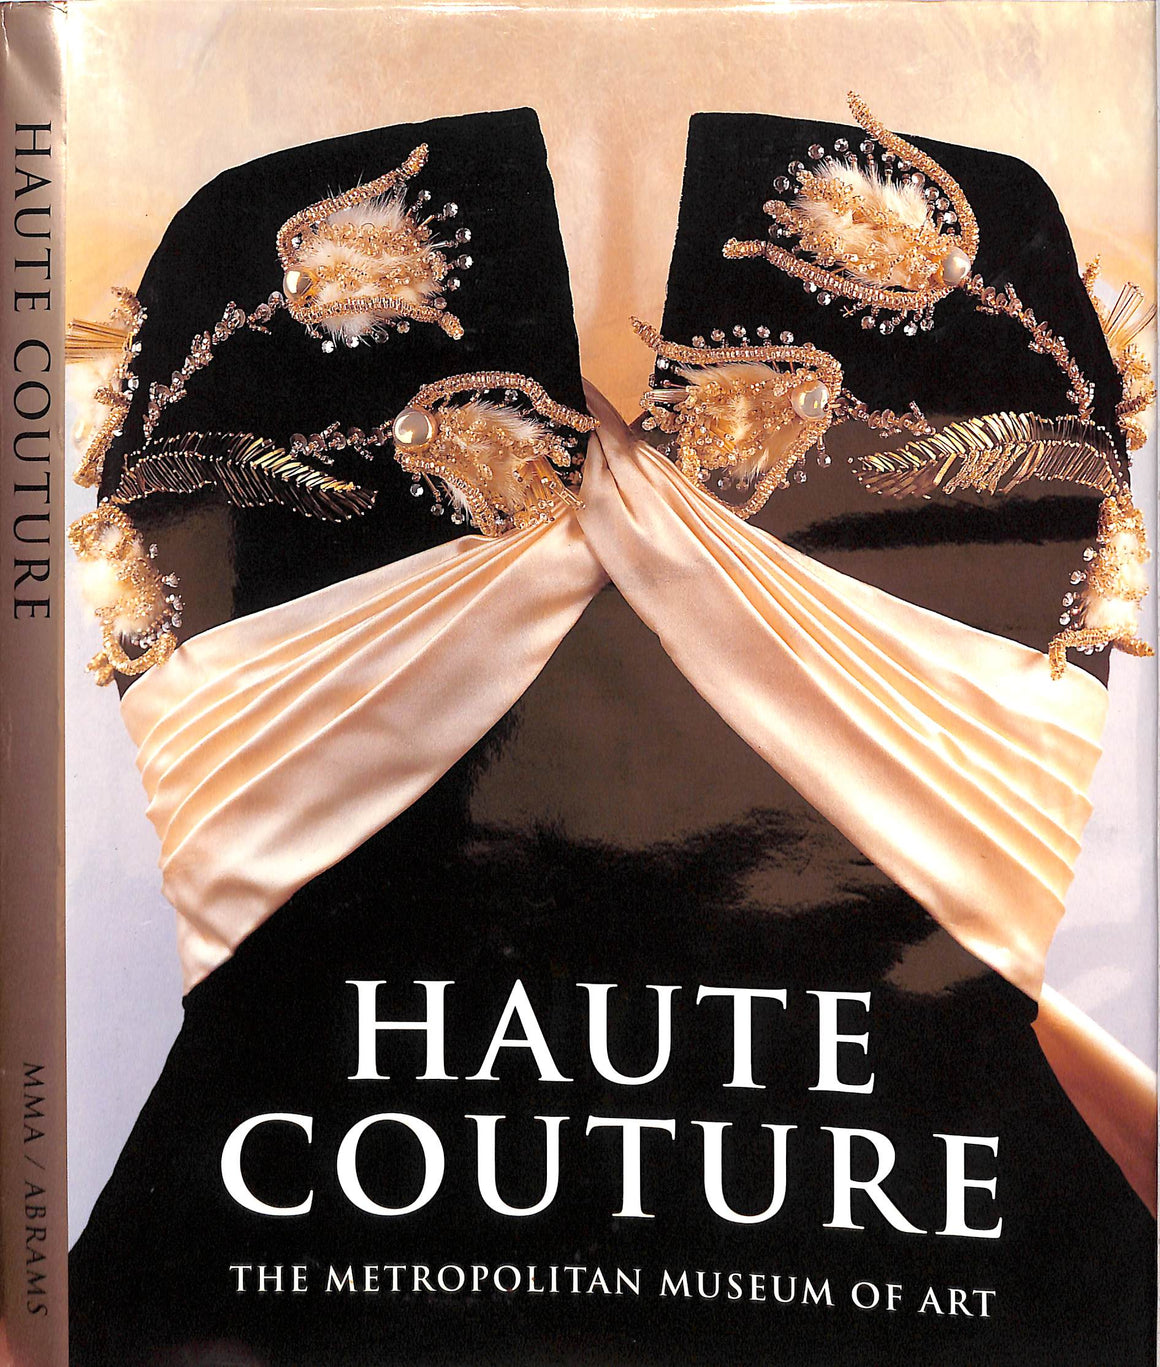 "Haute Couture" 1995 MARTIN, Richard & KODA, Harold